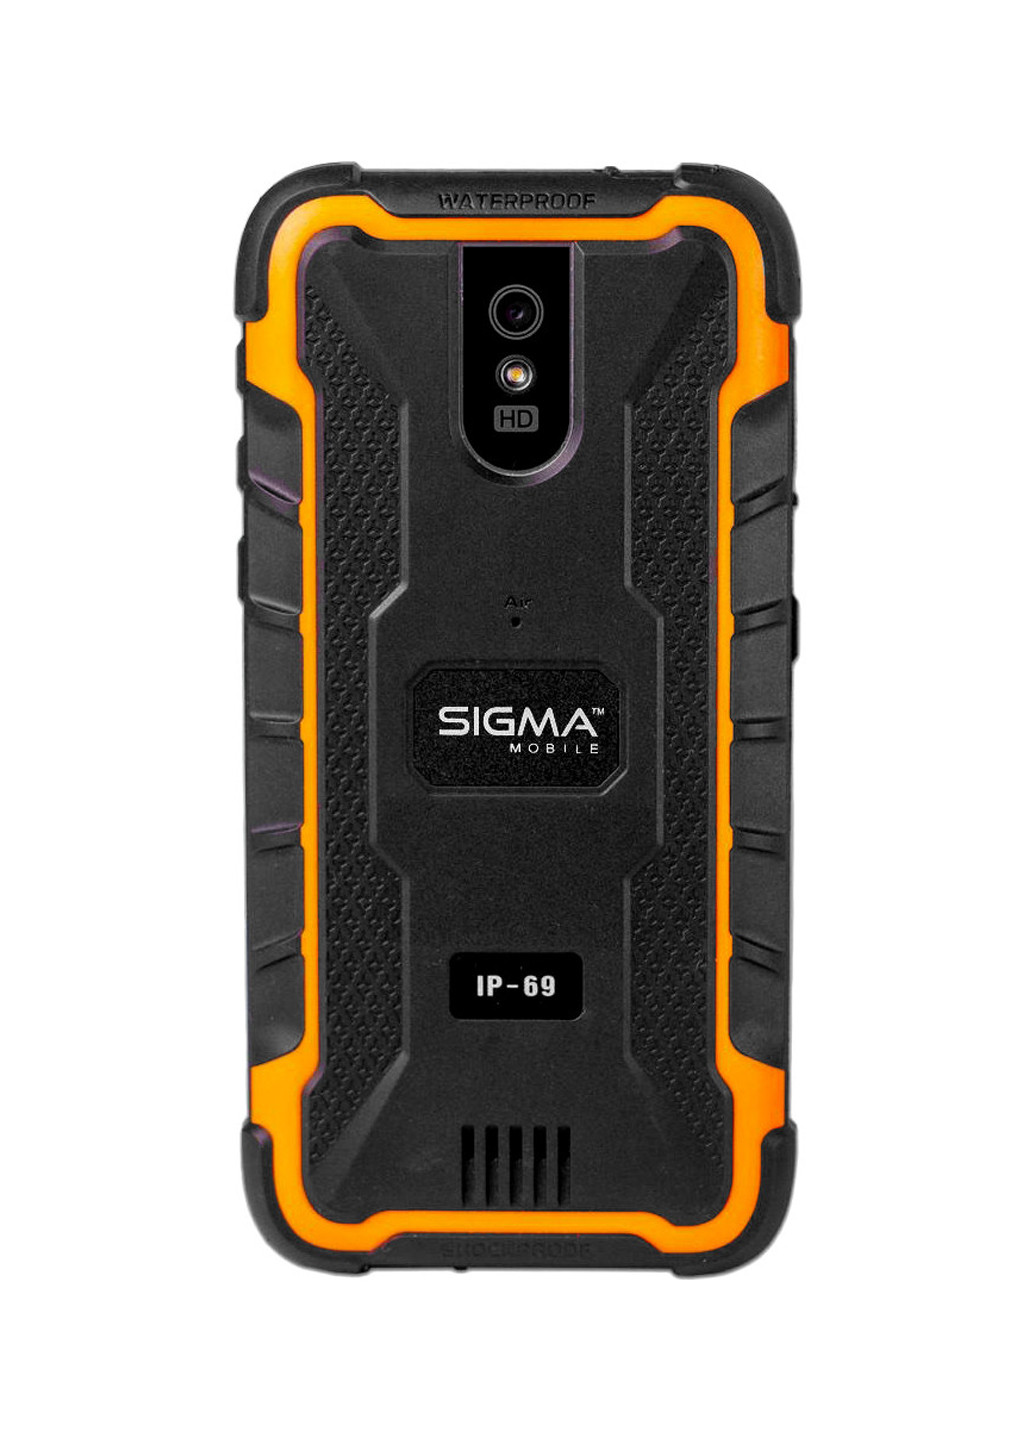 Смартфон Sigma mobile x-treme pq29 2/16gb black orange (4827798875520) (130425126)